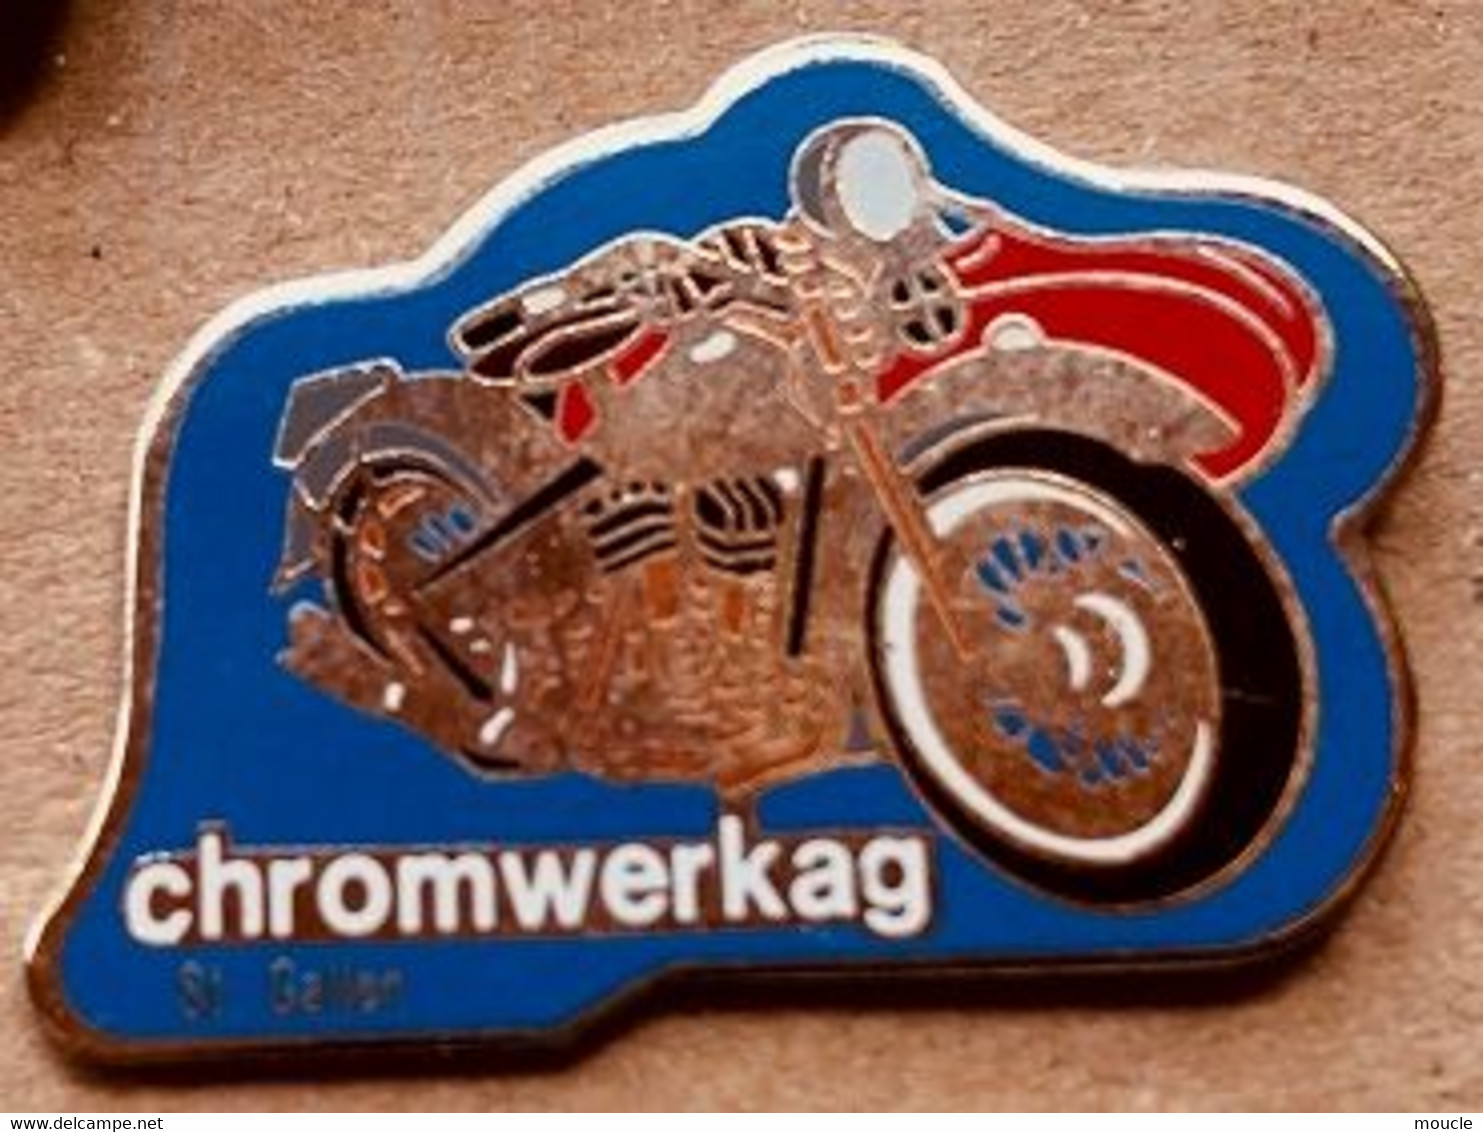 MOTO - SIDE CAR - CHROMWERKAG - SAINT GALLEN - SCHWEIZ - SAINT GALL - SUISSE - MOTORRAD    -                 (18) - Motos